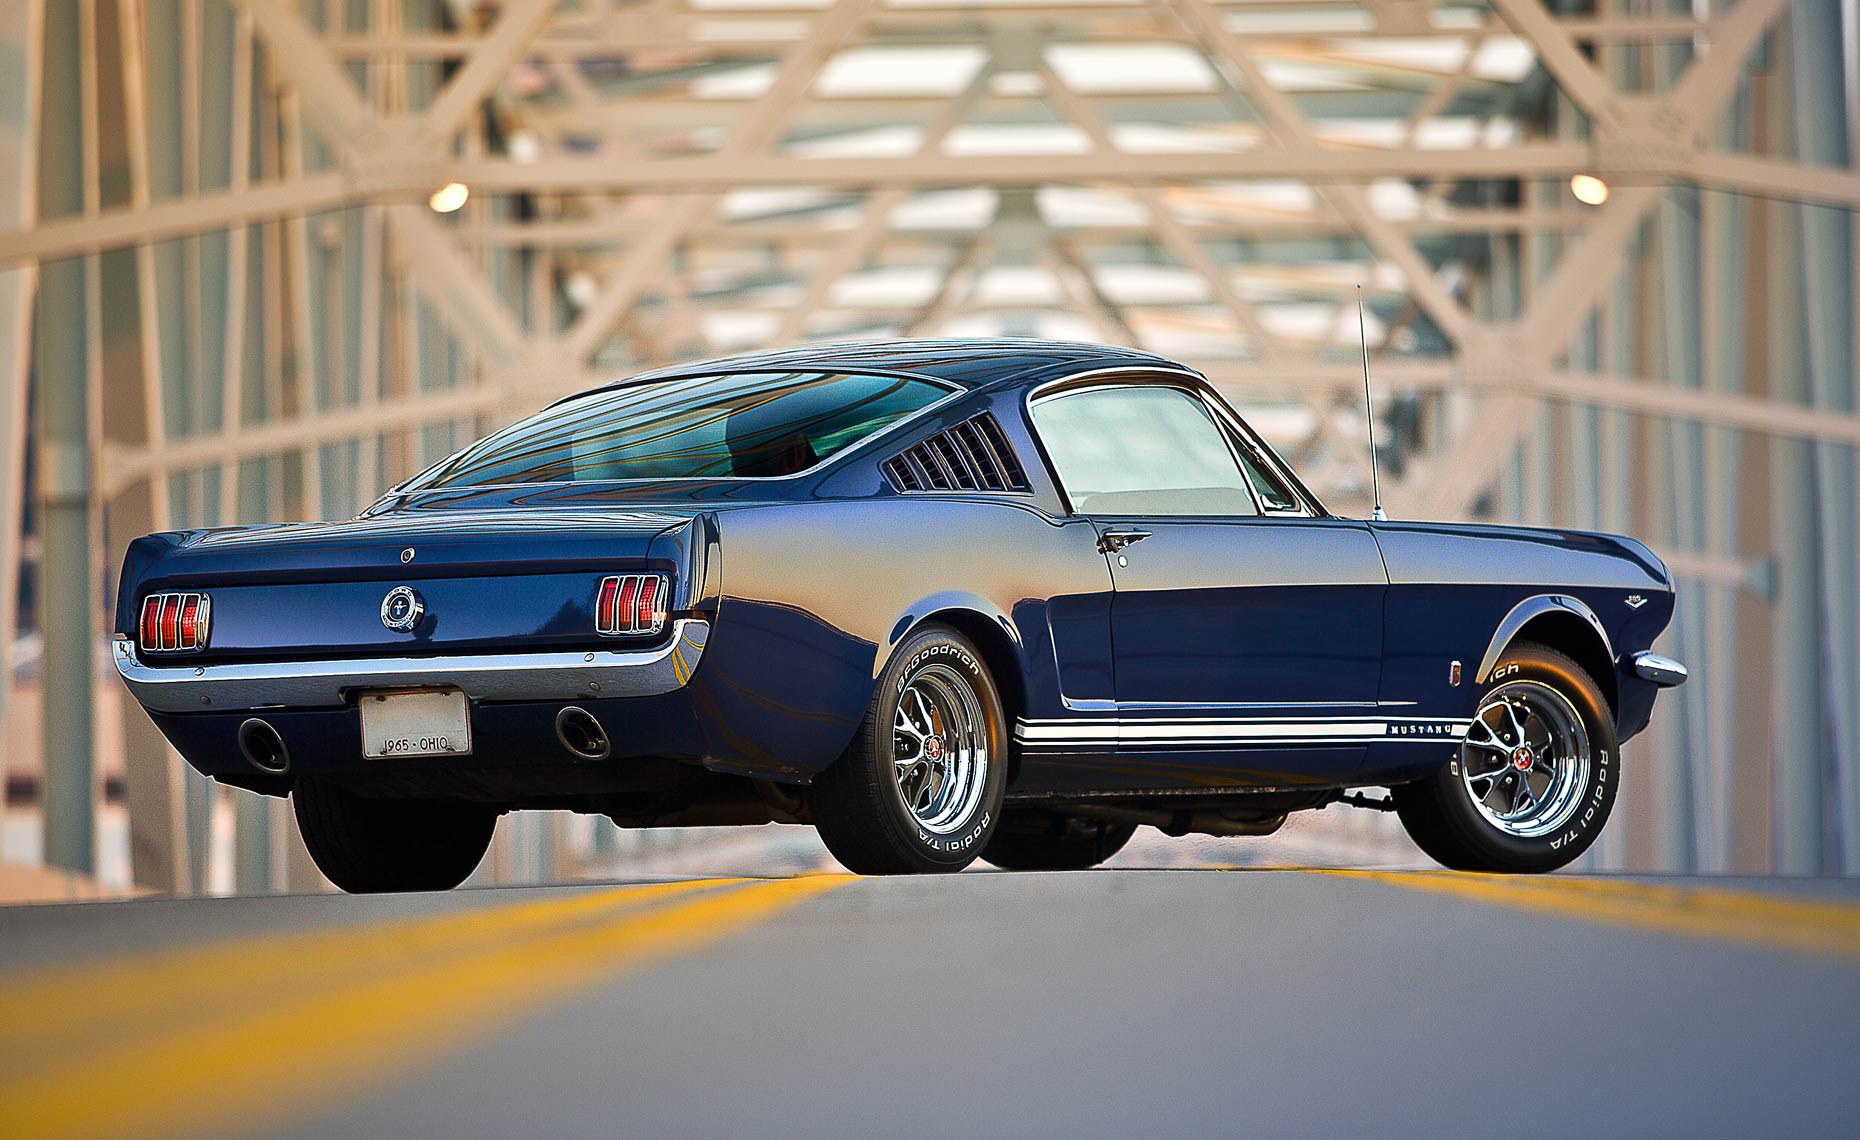 Mustang-GT-rear-3qtr-brdg